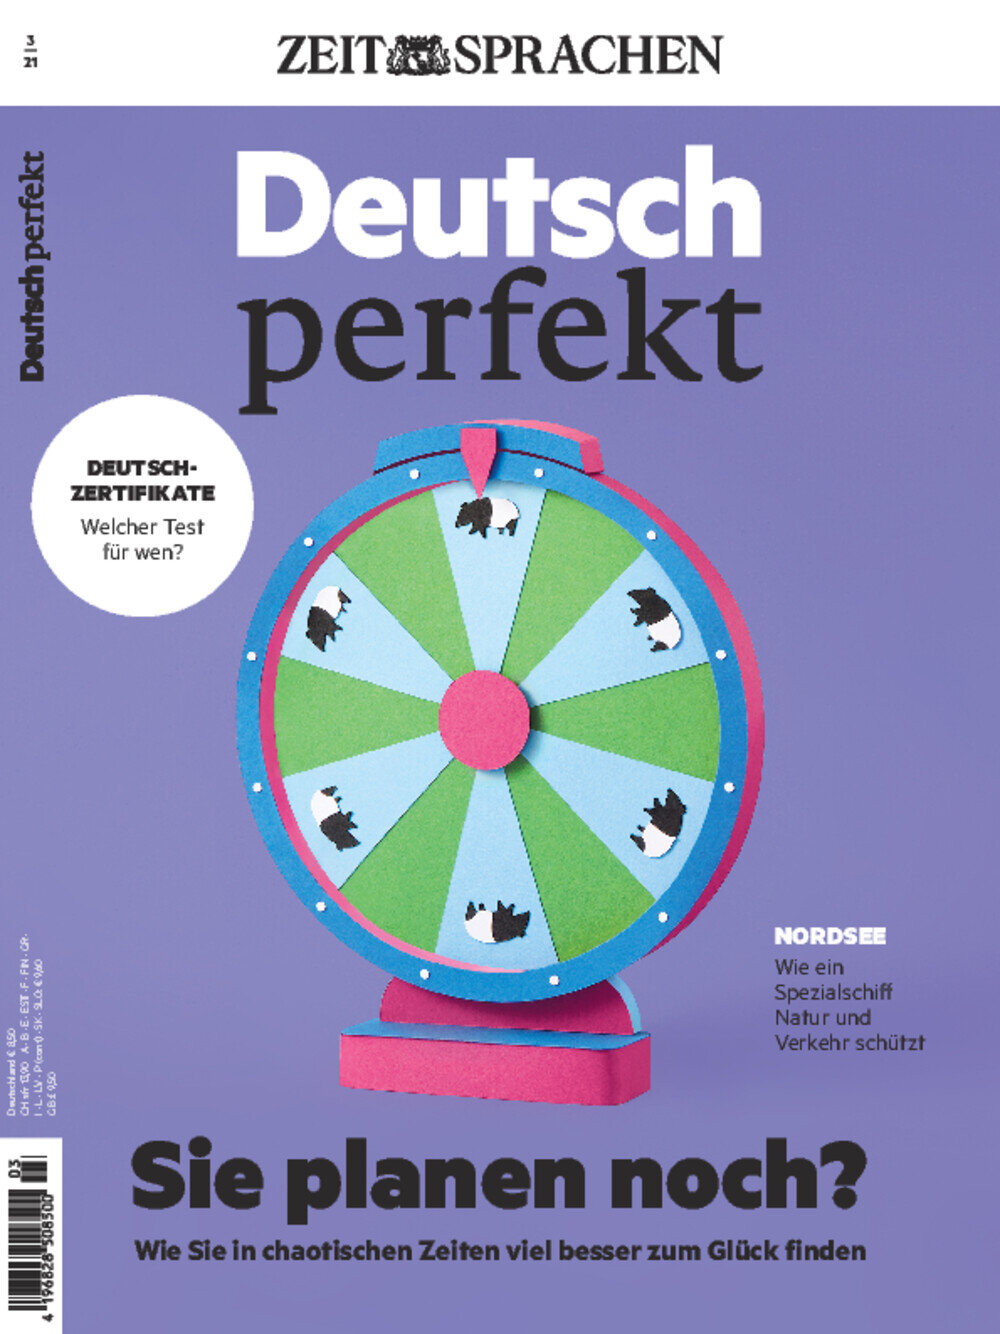 Deutsch perfekt ePaper 03/2021